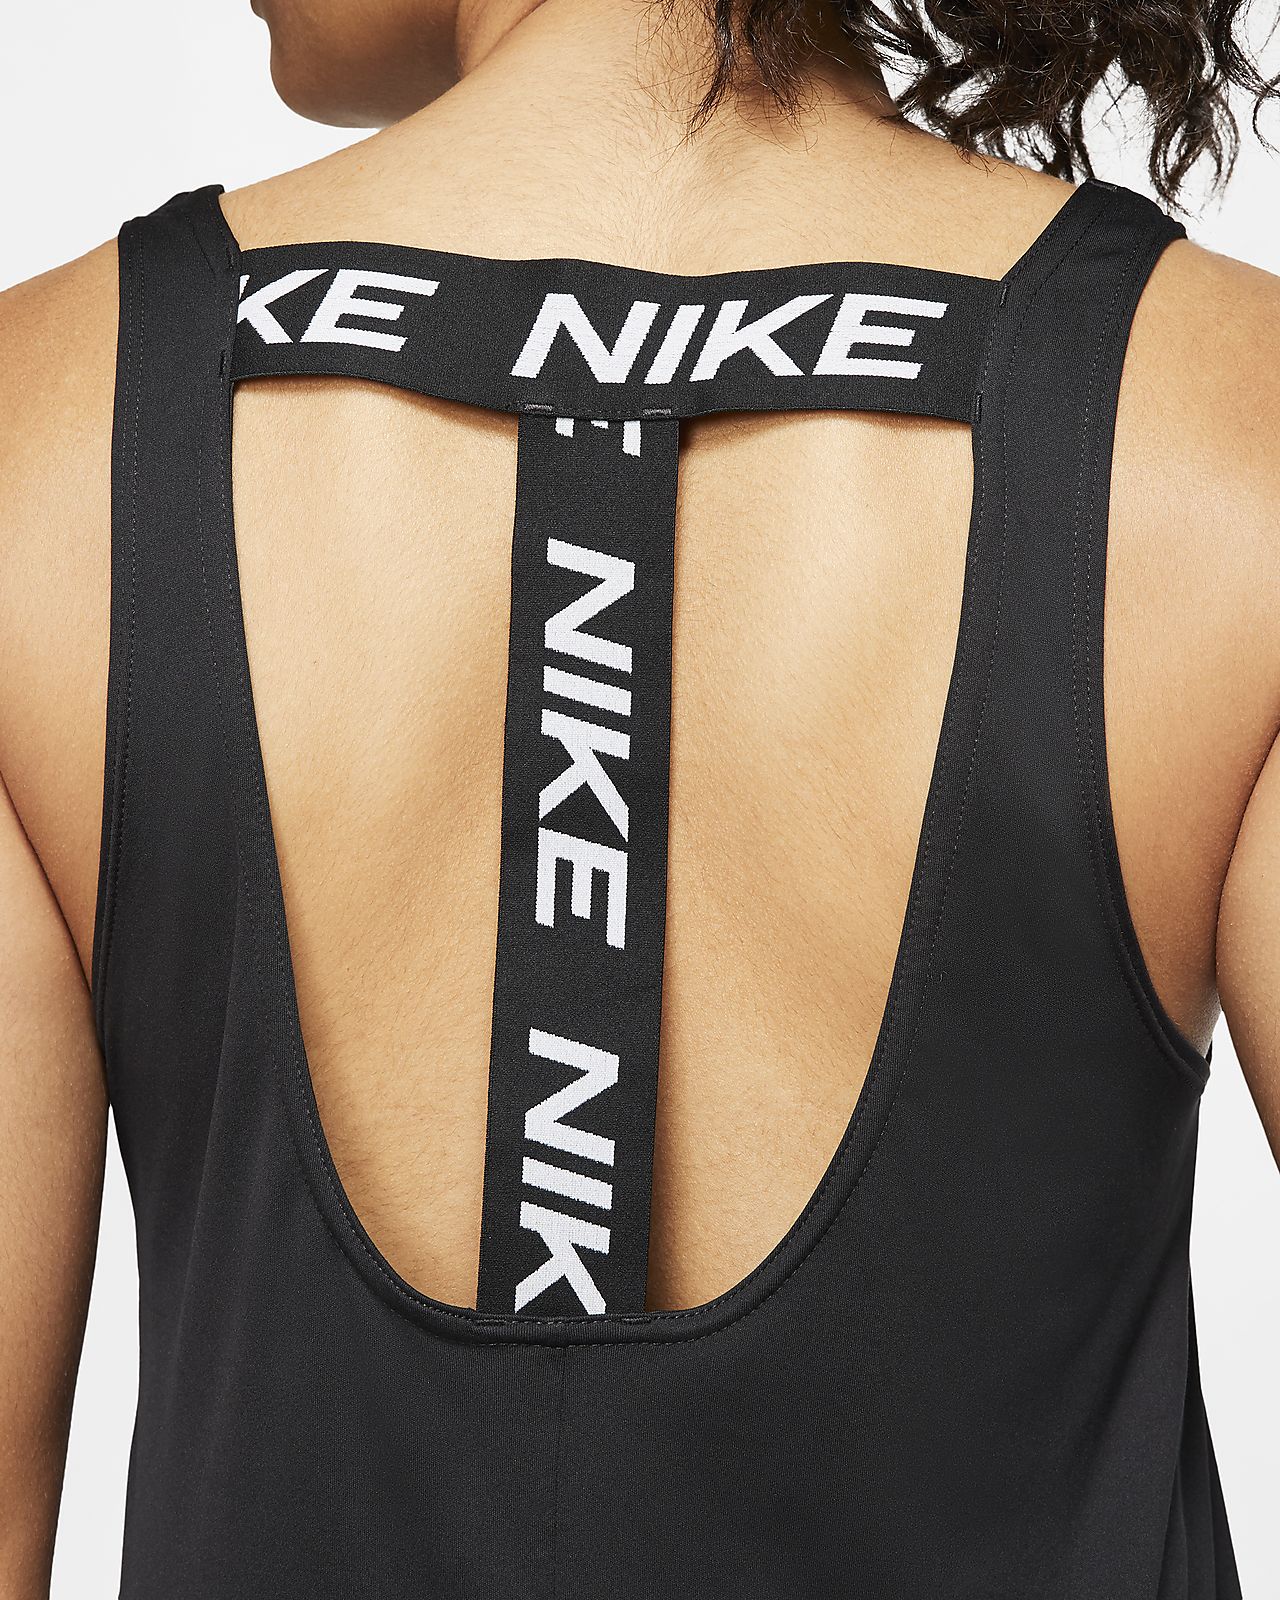 nike womens gym vest